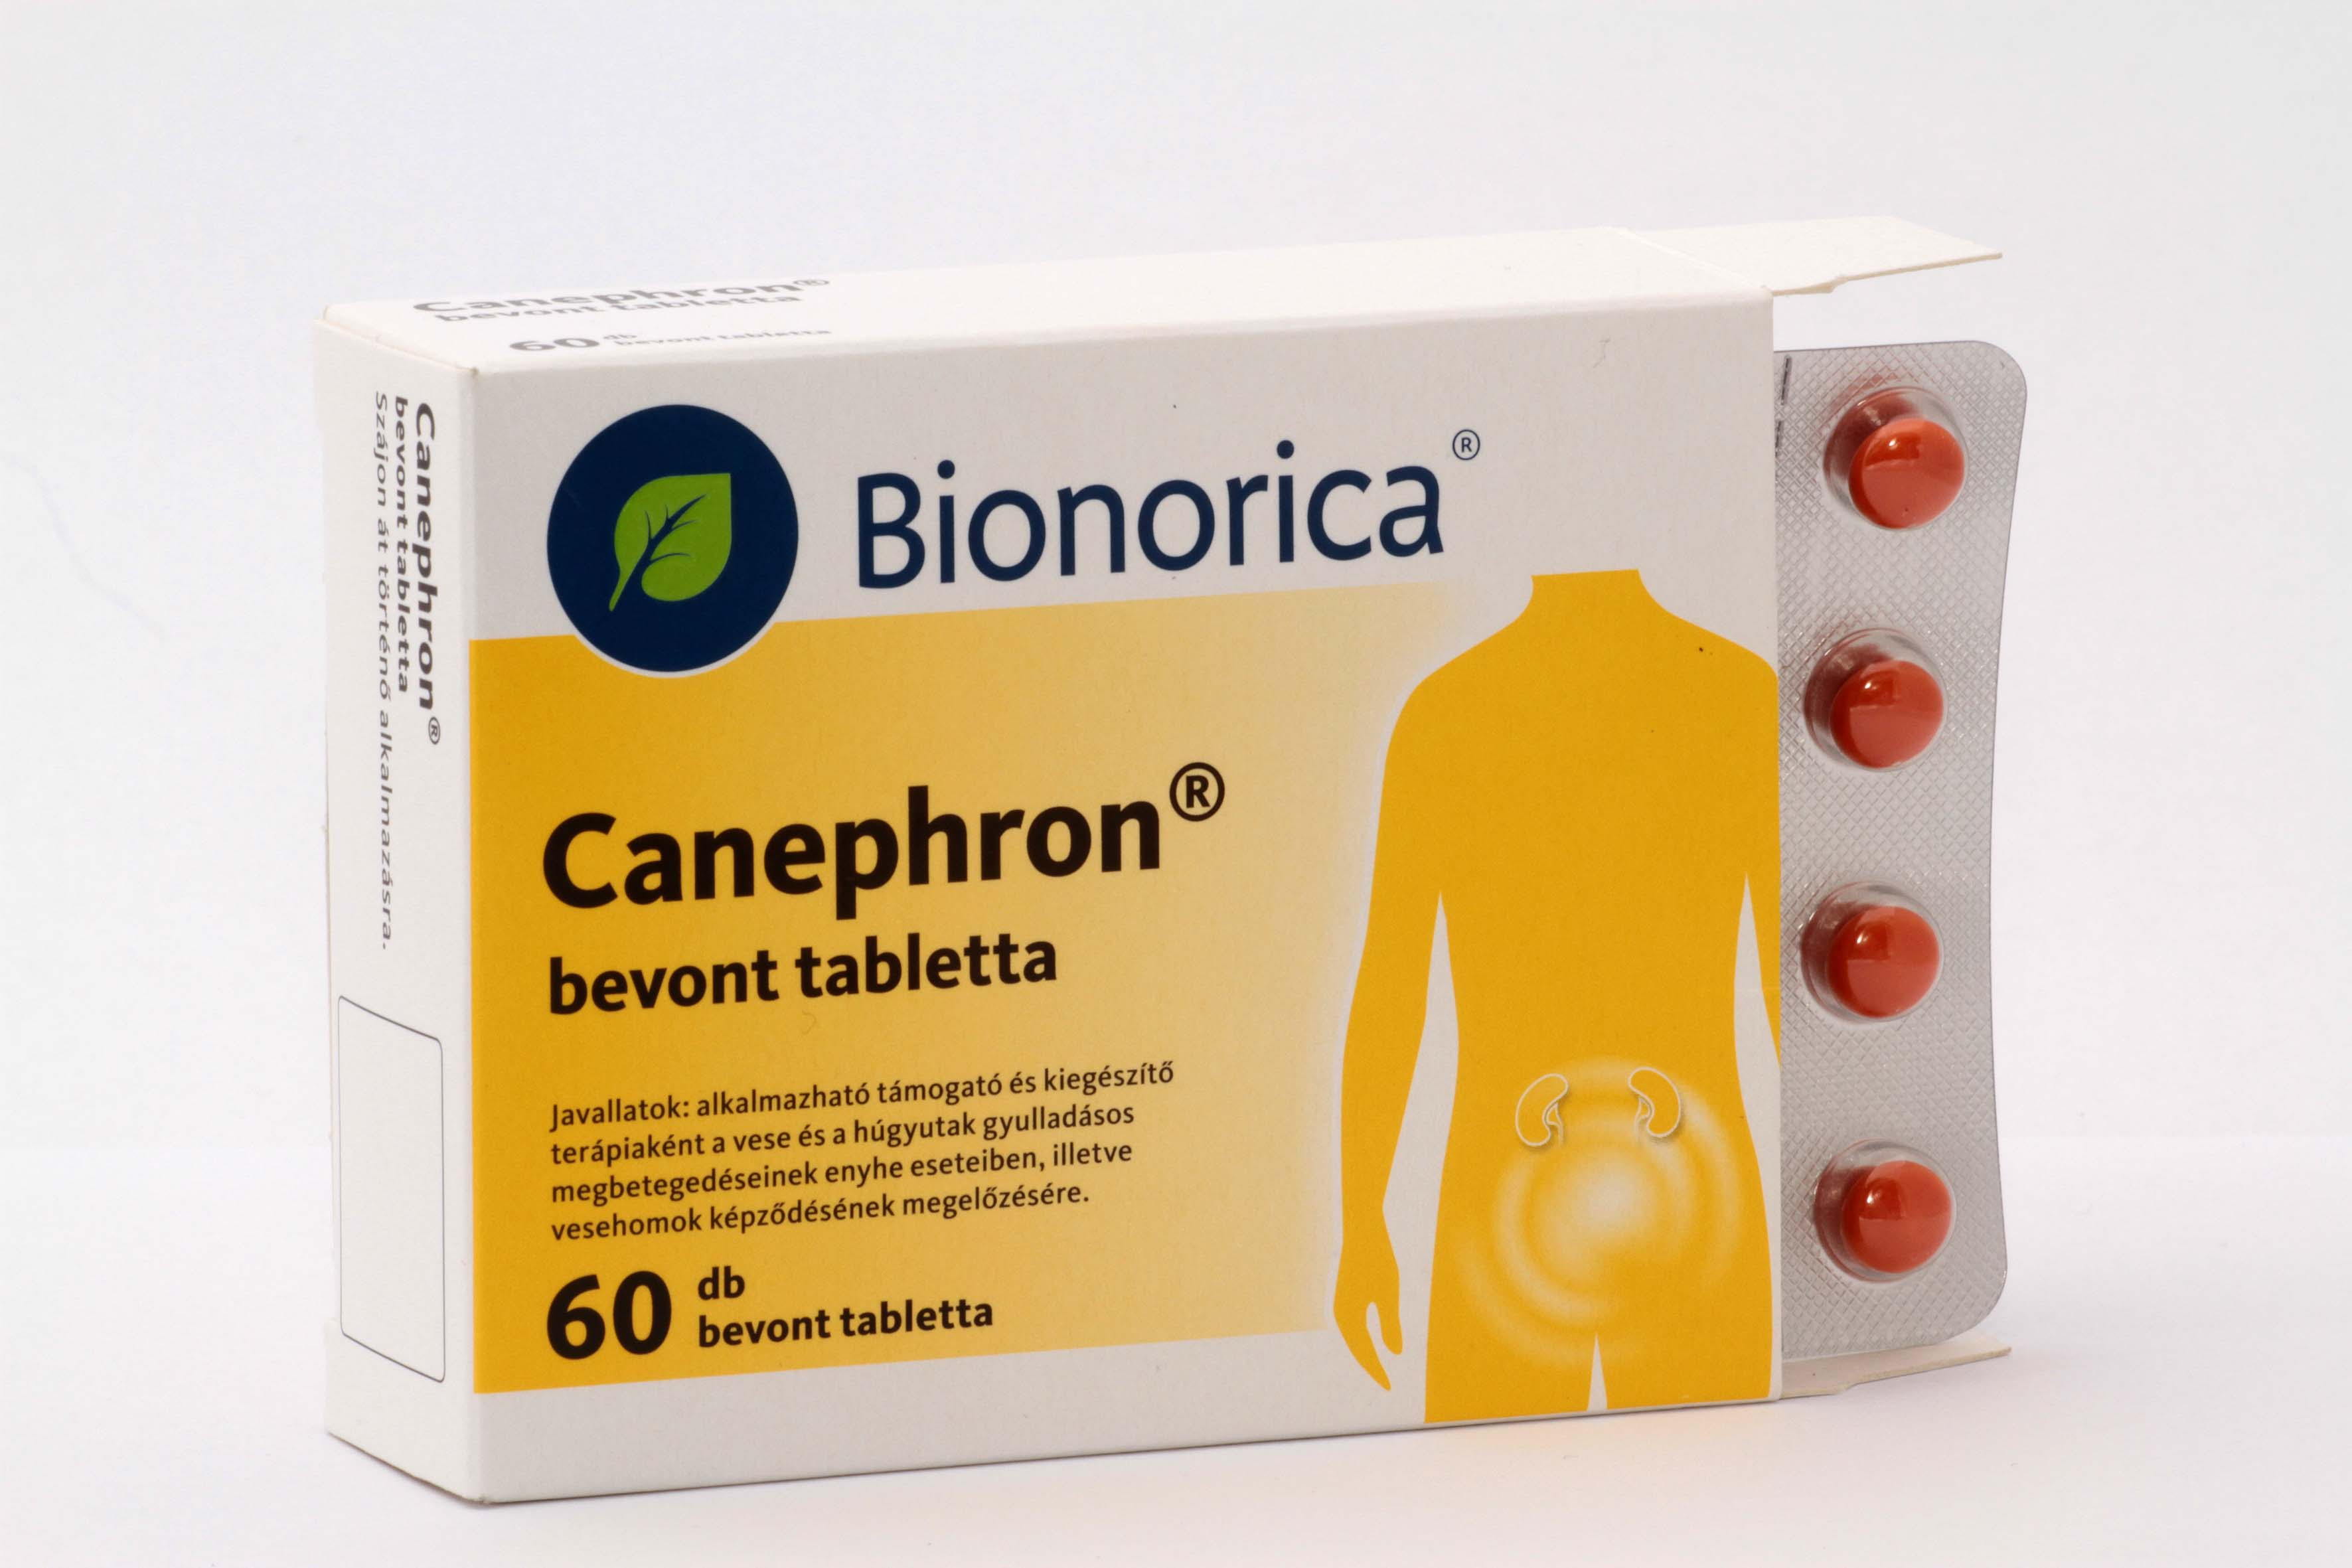 Canephron® bevont tabletta